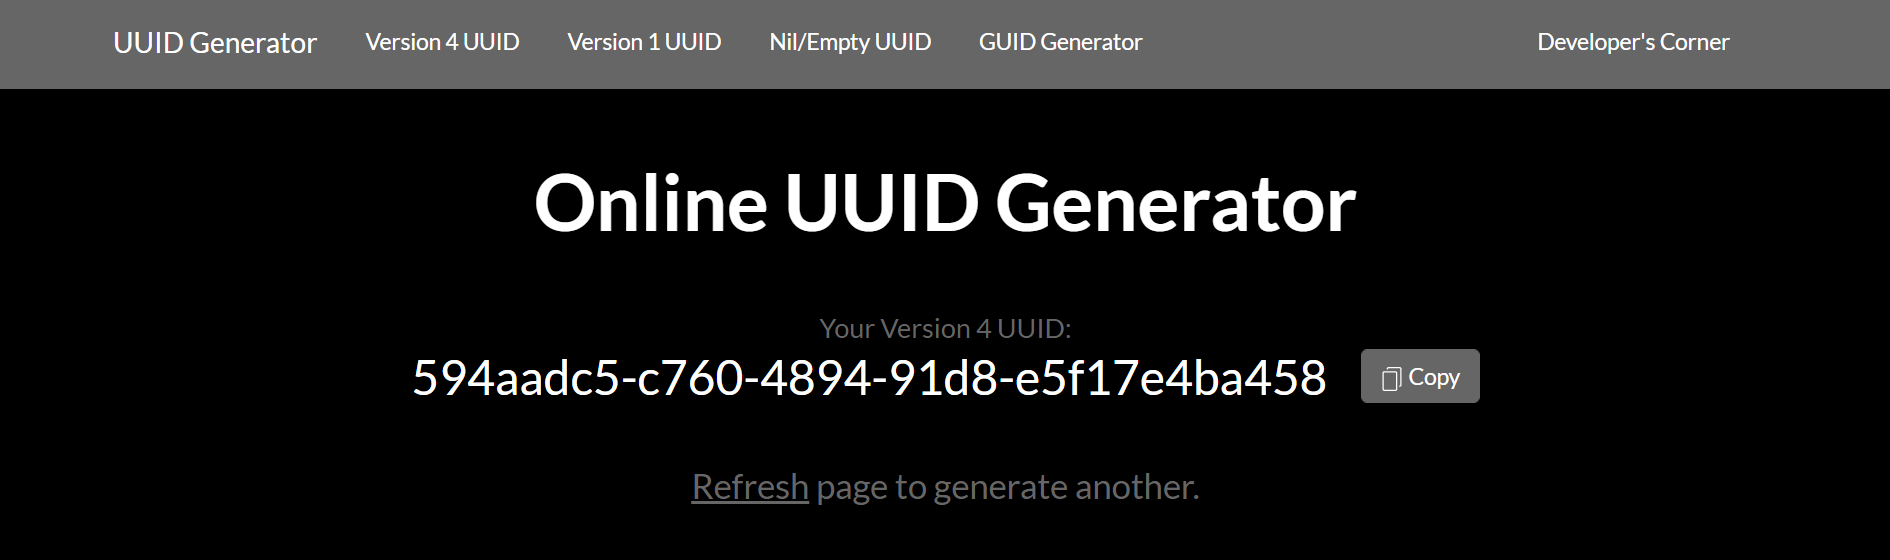 UUIDGenerator.net のホーム画面の画像。カスタム UUID が生成されています